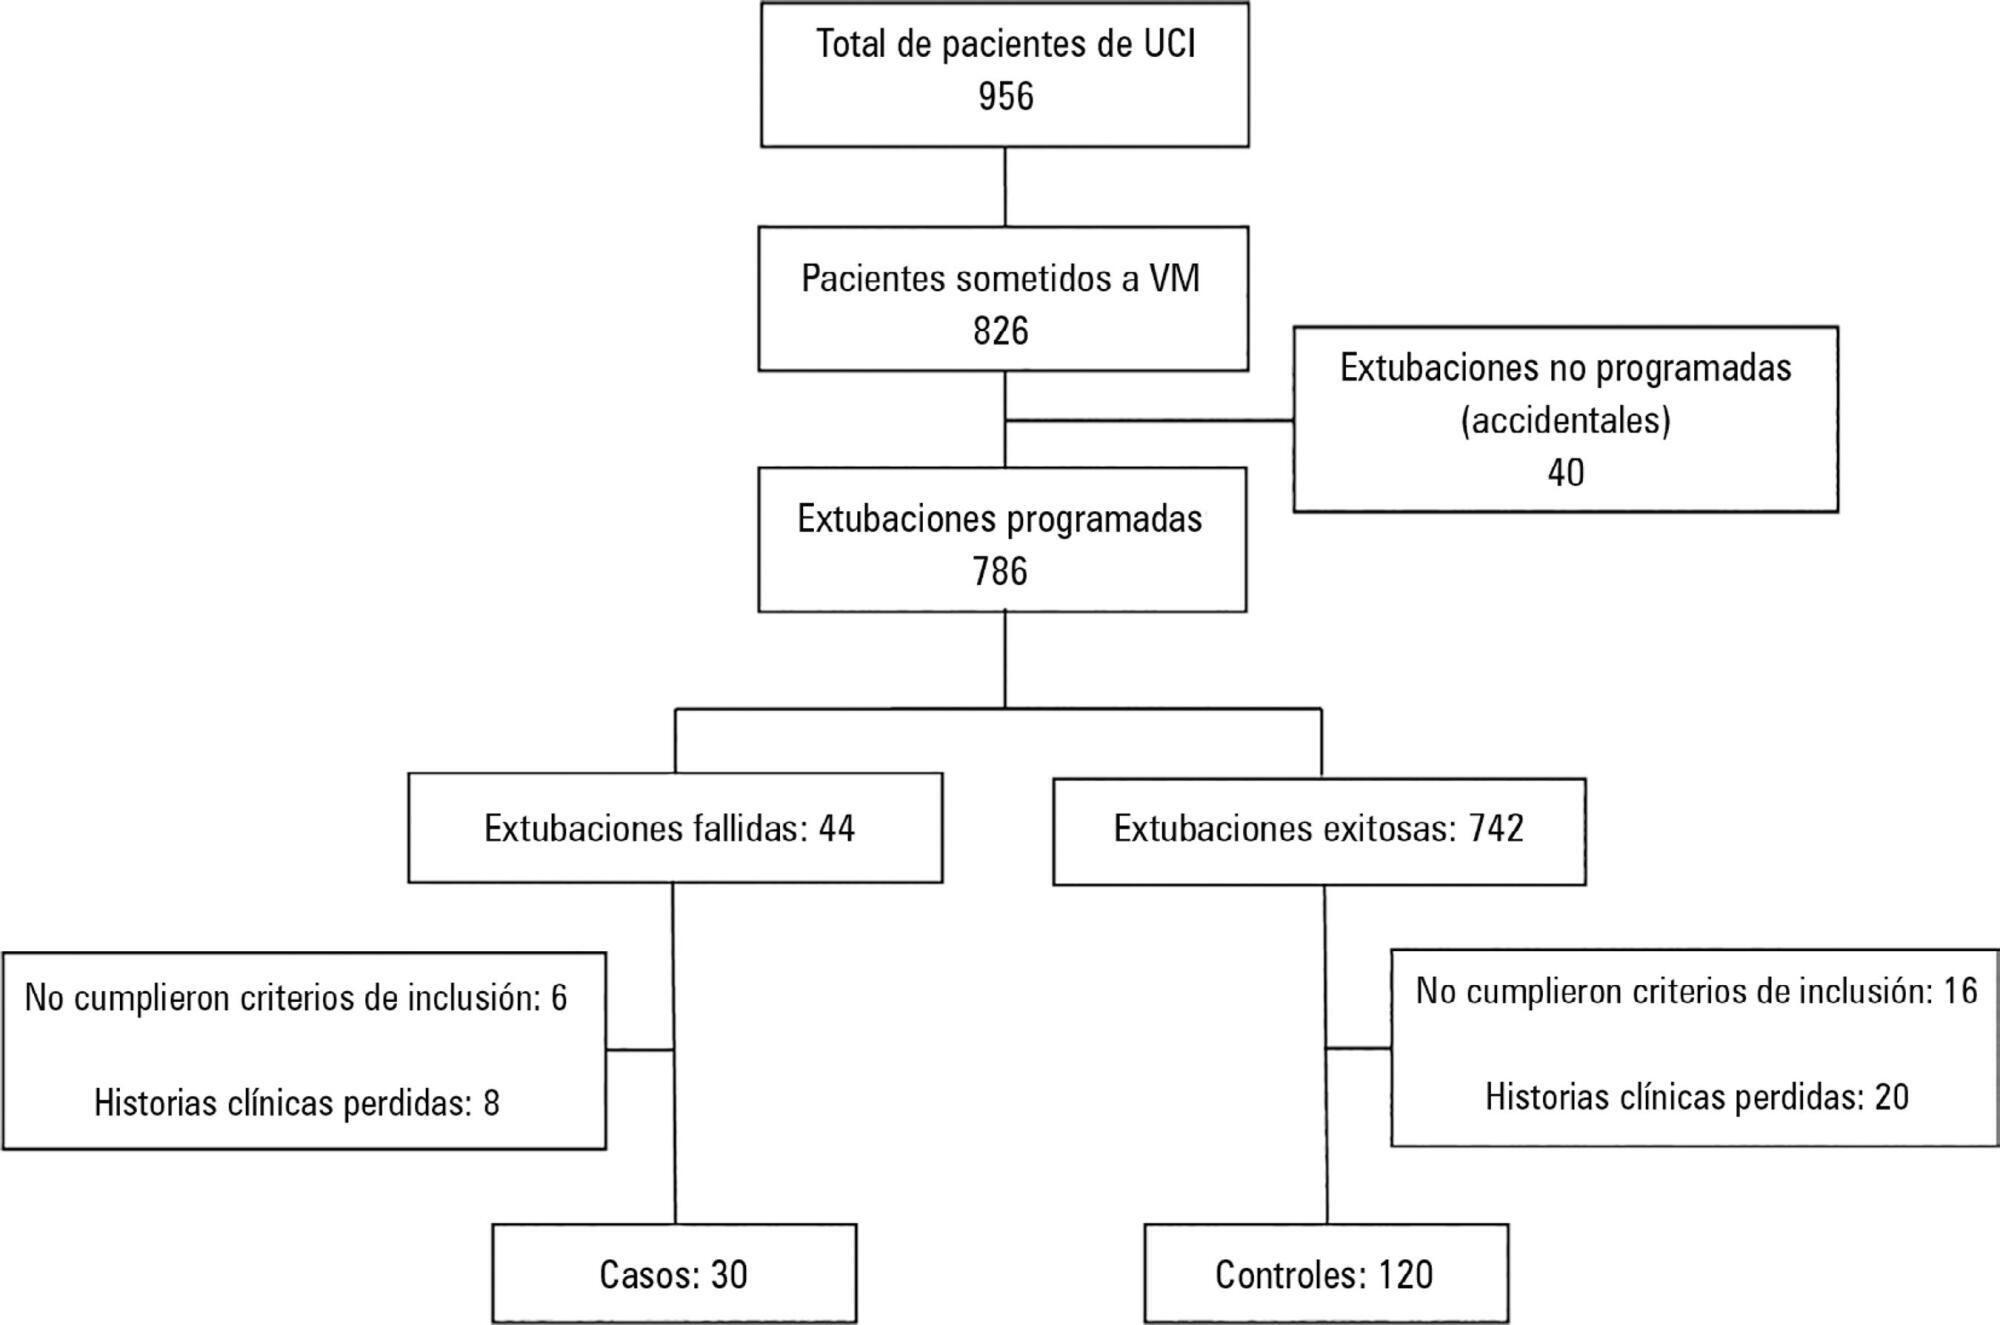 Risk factors for extubation failure in the intensive care unit